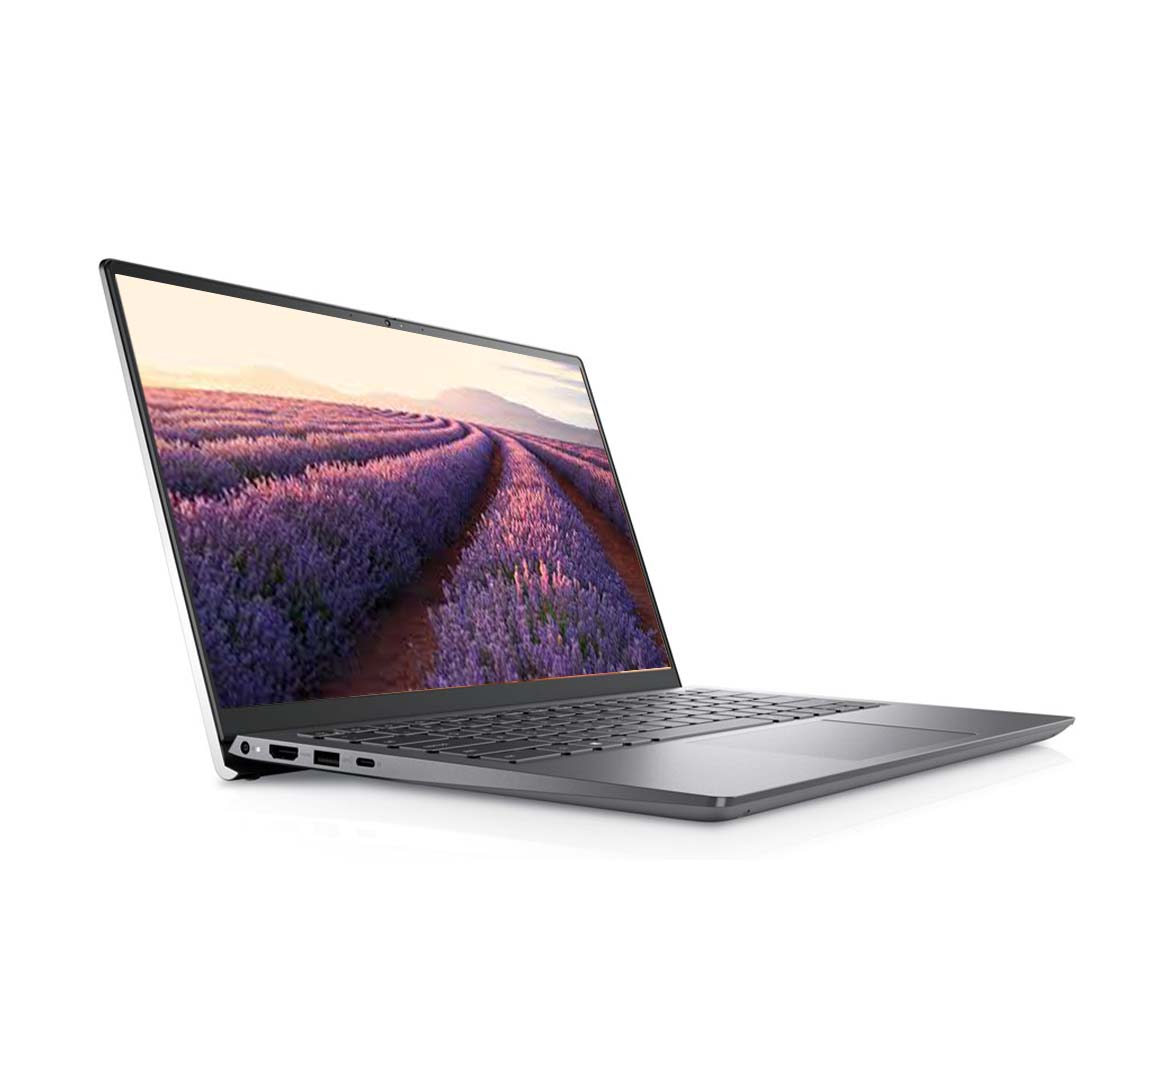 Dell Inspiron 5415 Business Laptop ، وحدة المعالجة المركزية AMD Ryzen 7 Series ، 8 جيجابايت رام ، 512 جيجابايت SSD ، شاشة 14 بوصة ، Windows 10 Pro ، كمبيوتر محمول مجدد